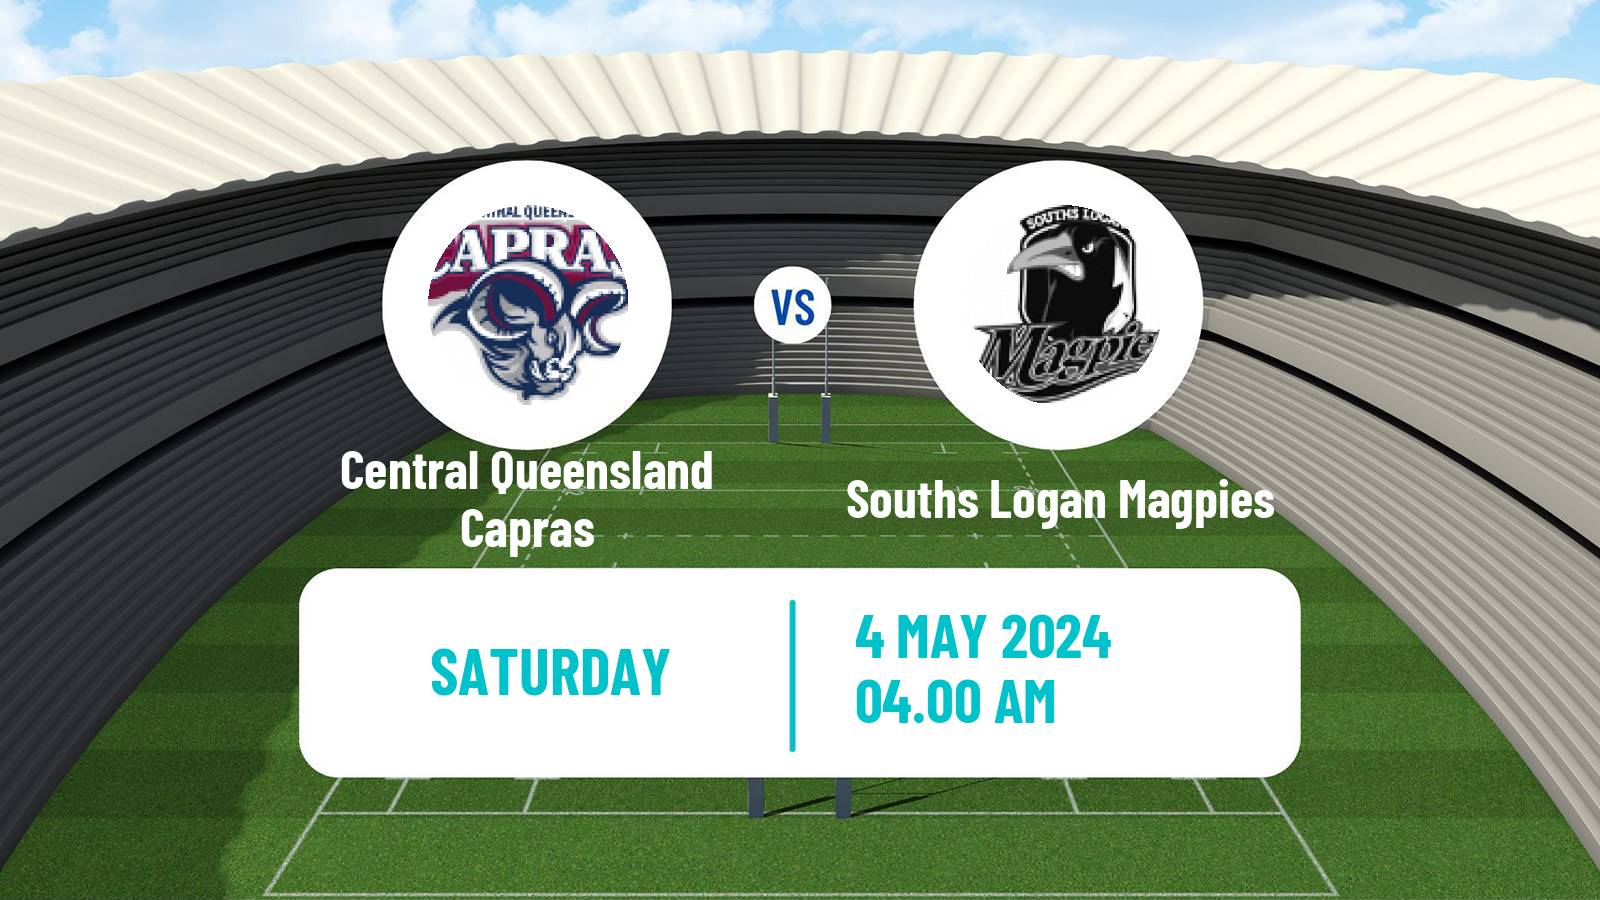 Rugby league Australian Queensland Cup Central Queensland Capras - Souths Logan Magpies